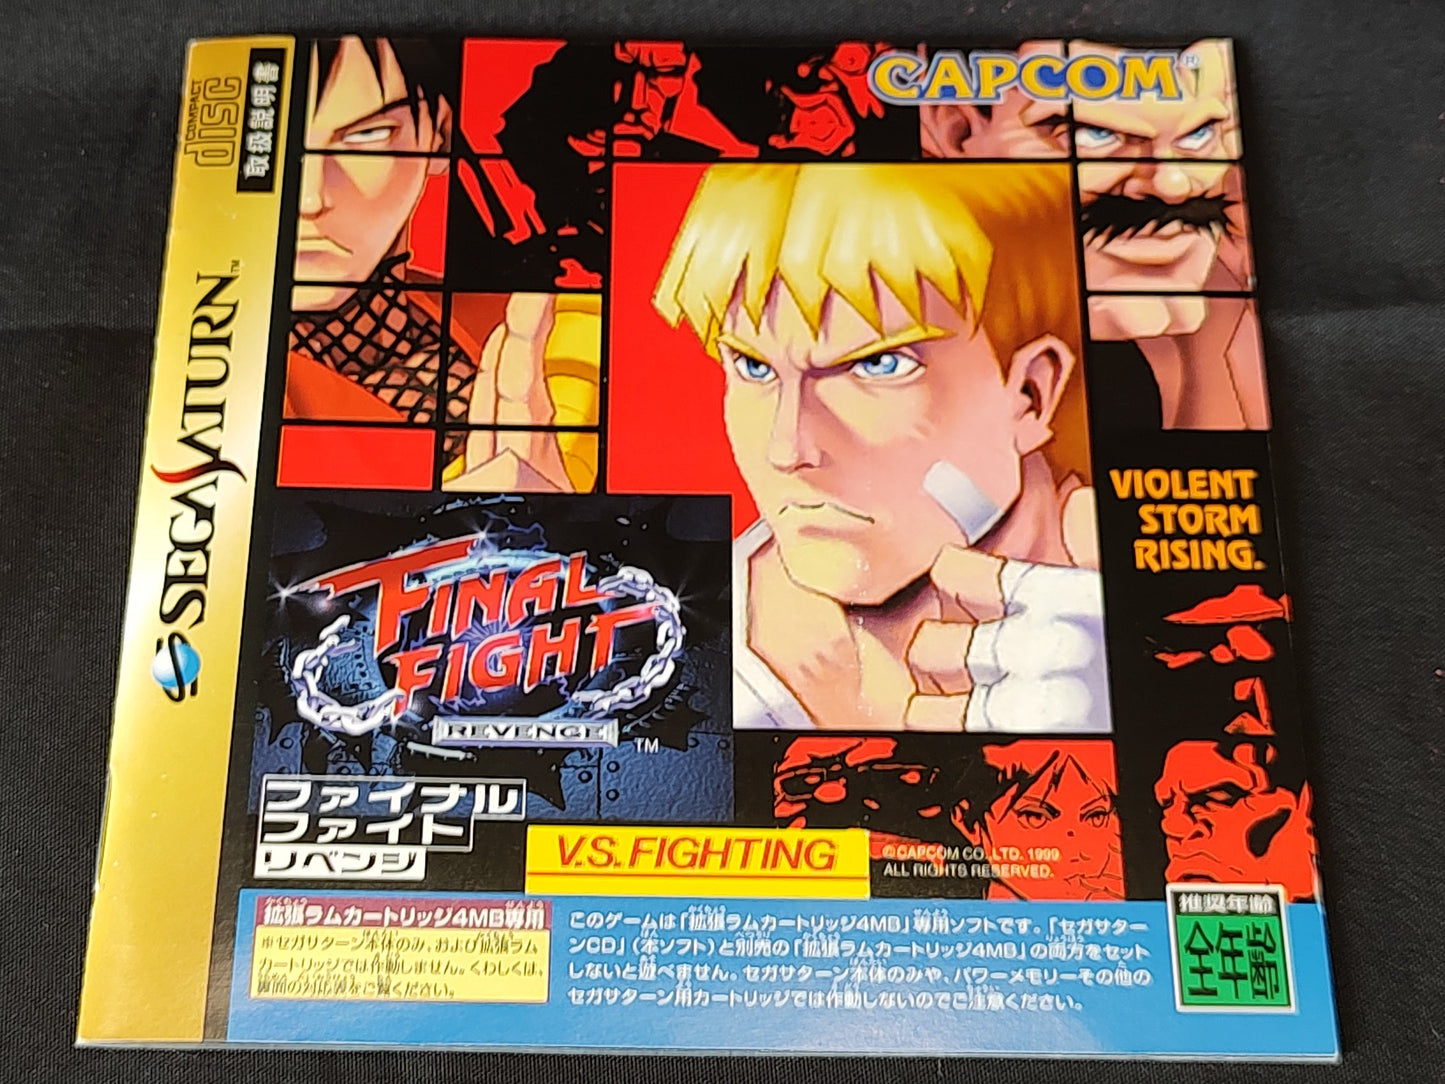 Final Fight Revenge SEGA Saturn Game w/Spine and Reg Card,Manual,Boxed set-f1116